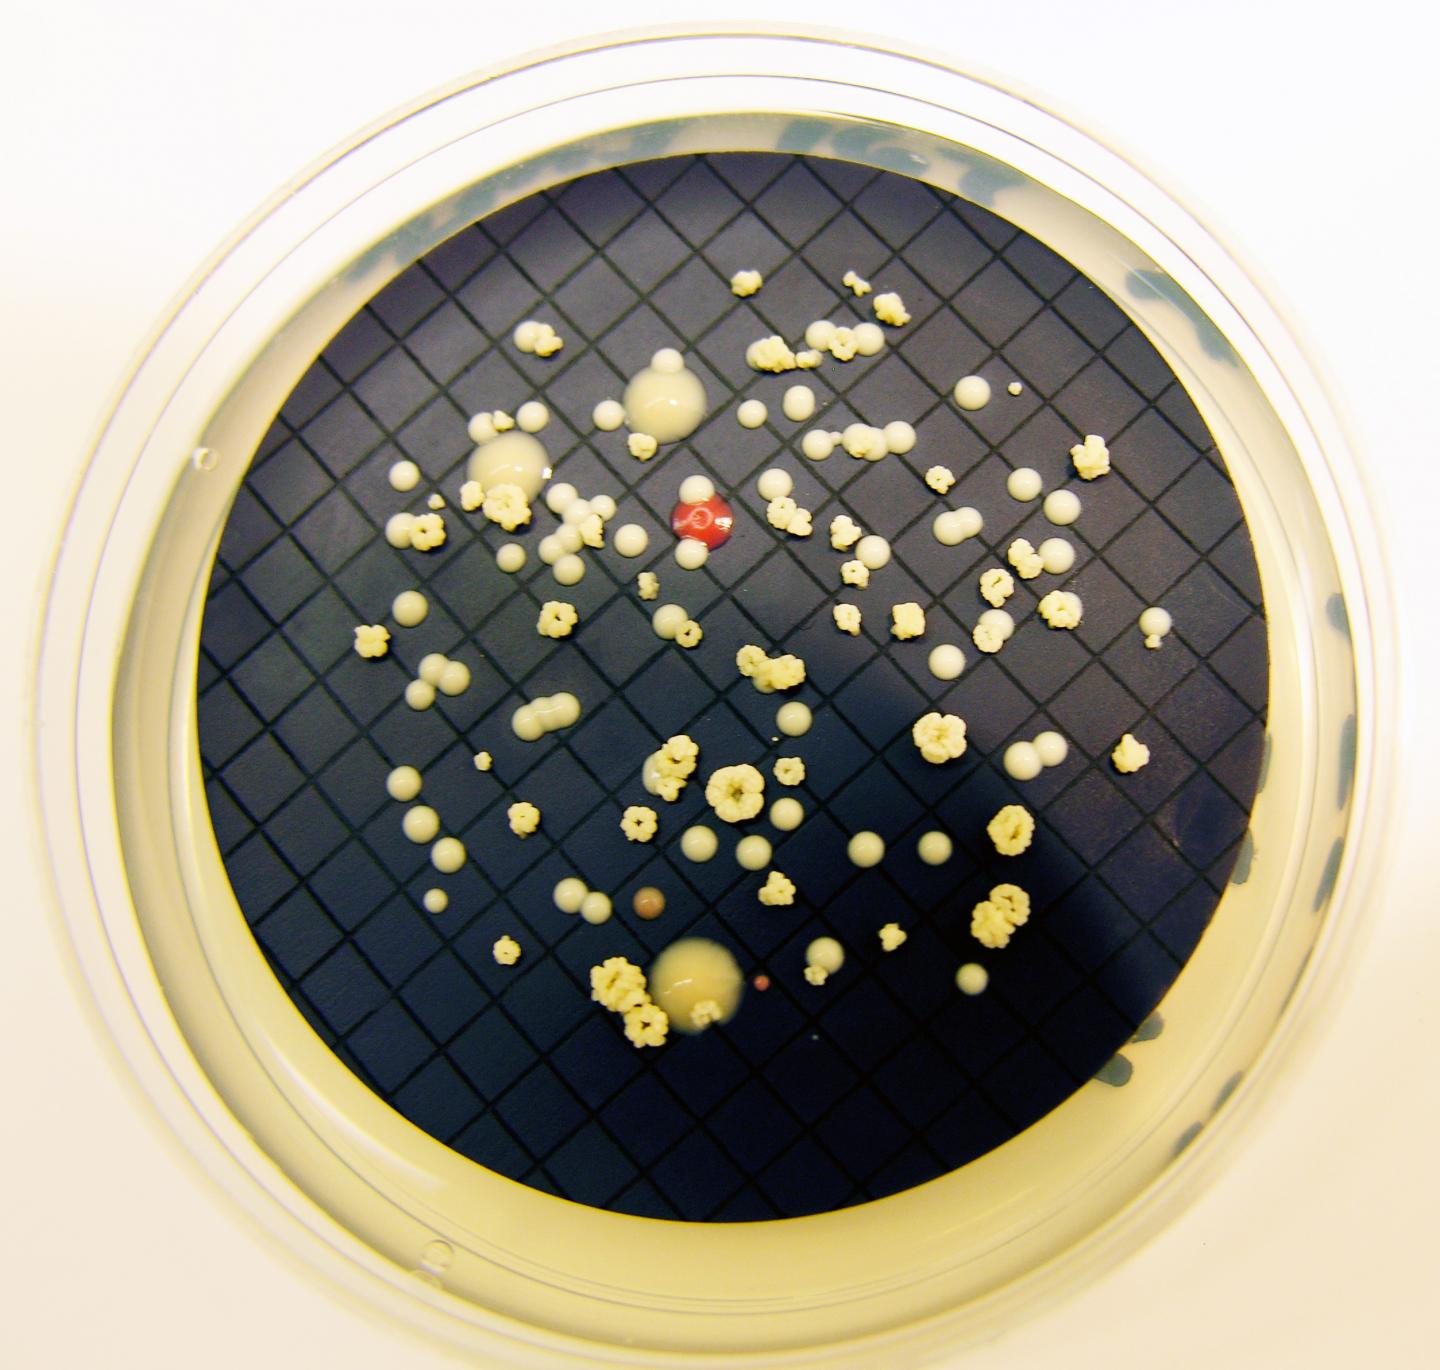 Bacteria Growth